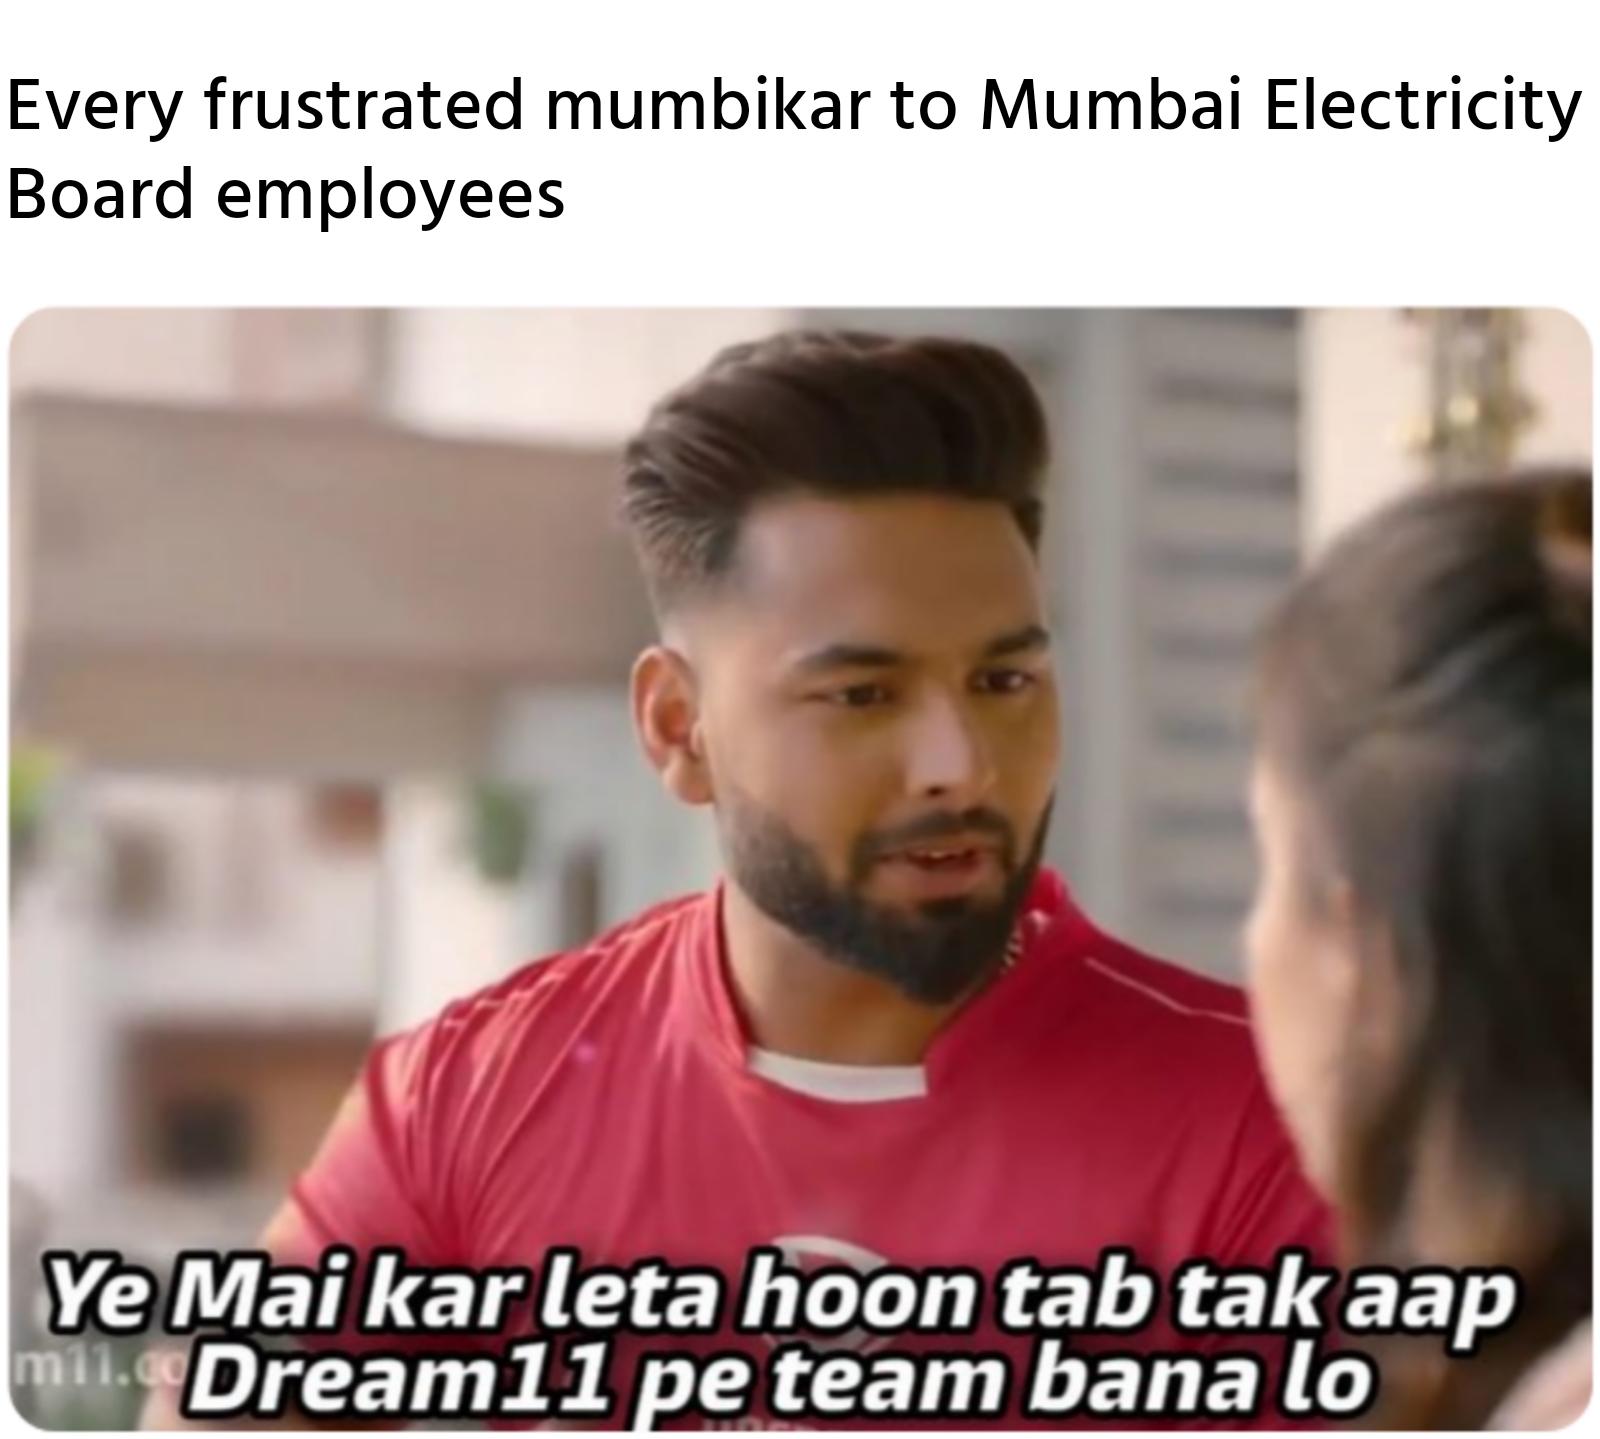 Every frustrated Mumbaikar to Mumbai Electricity Board Employees meme.jpg